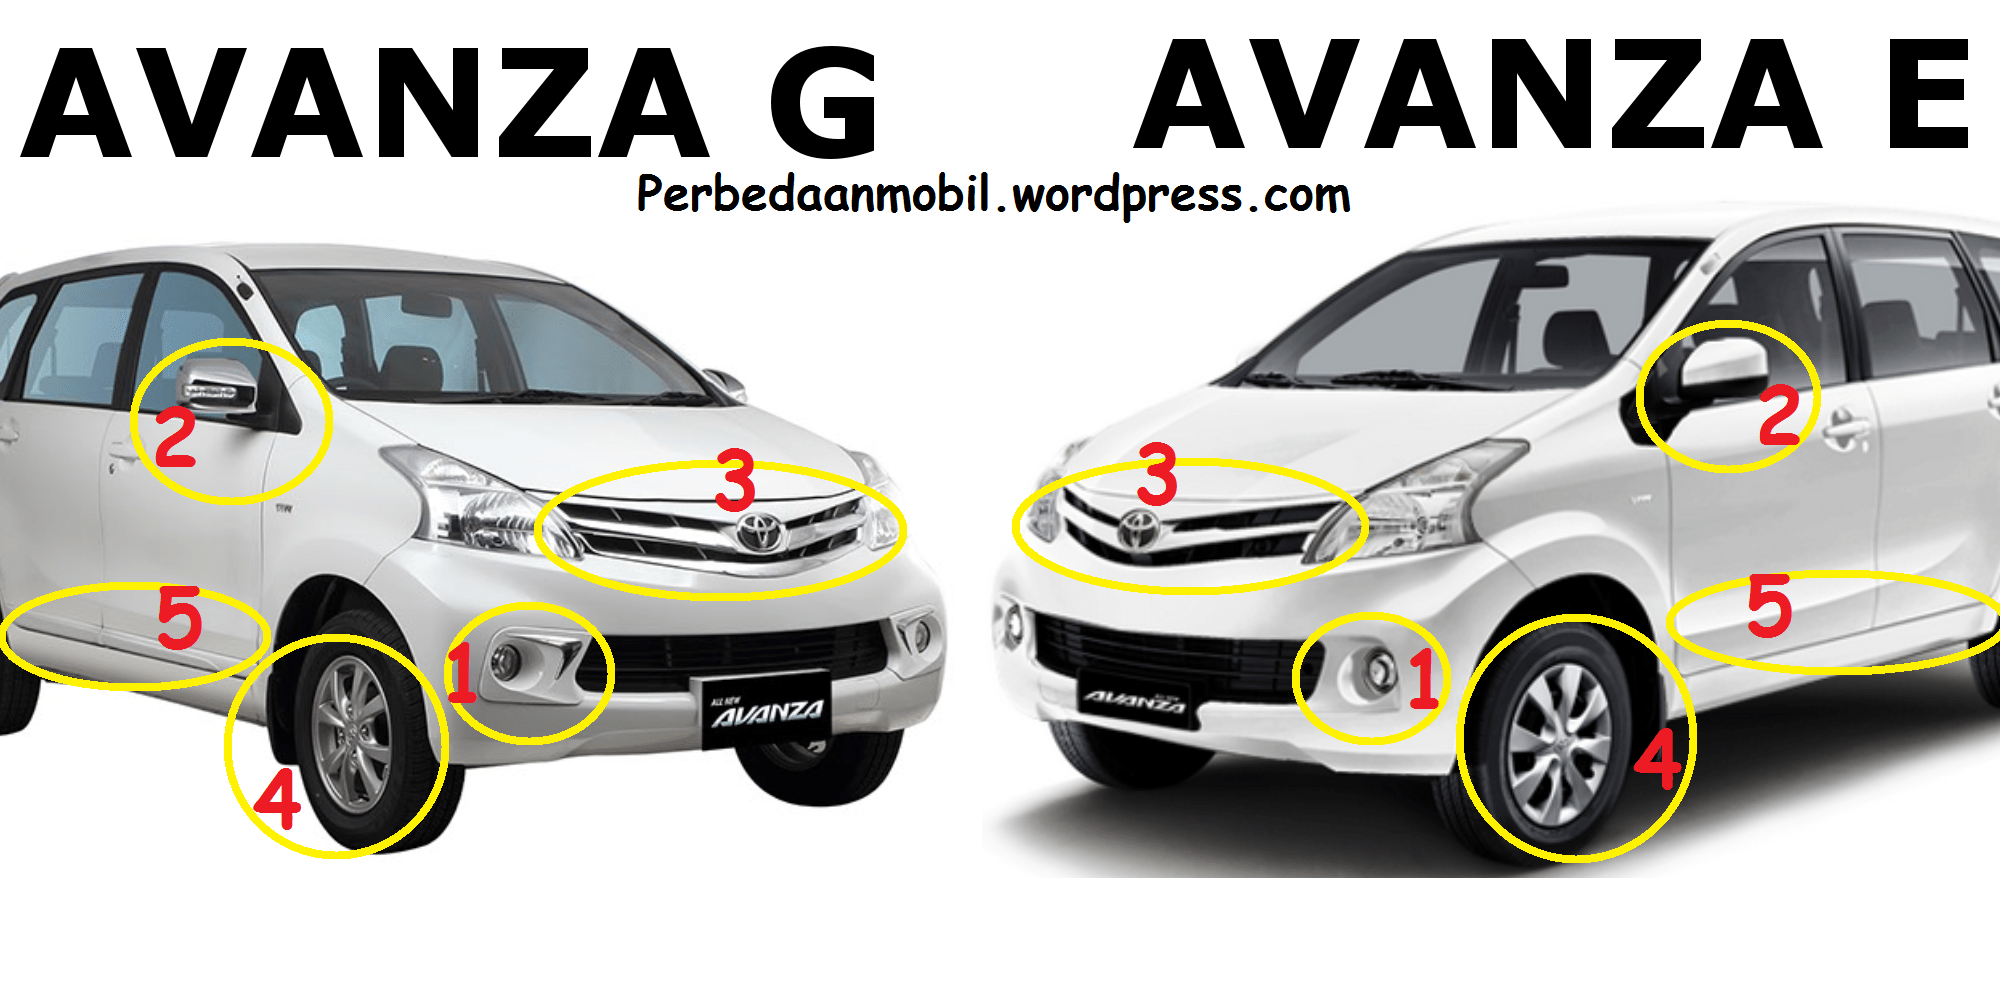 Perbedaan All New Avanza G Dan E. Perbedaan All New Avanza Tipe G dan E 2012 – 2015